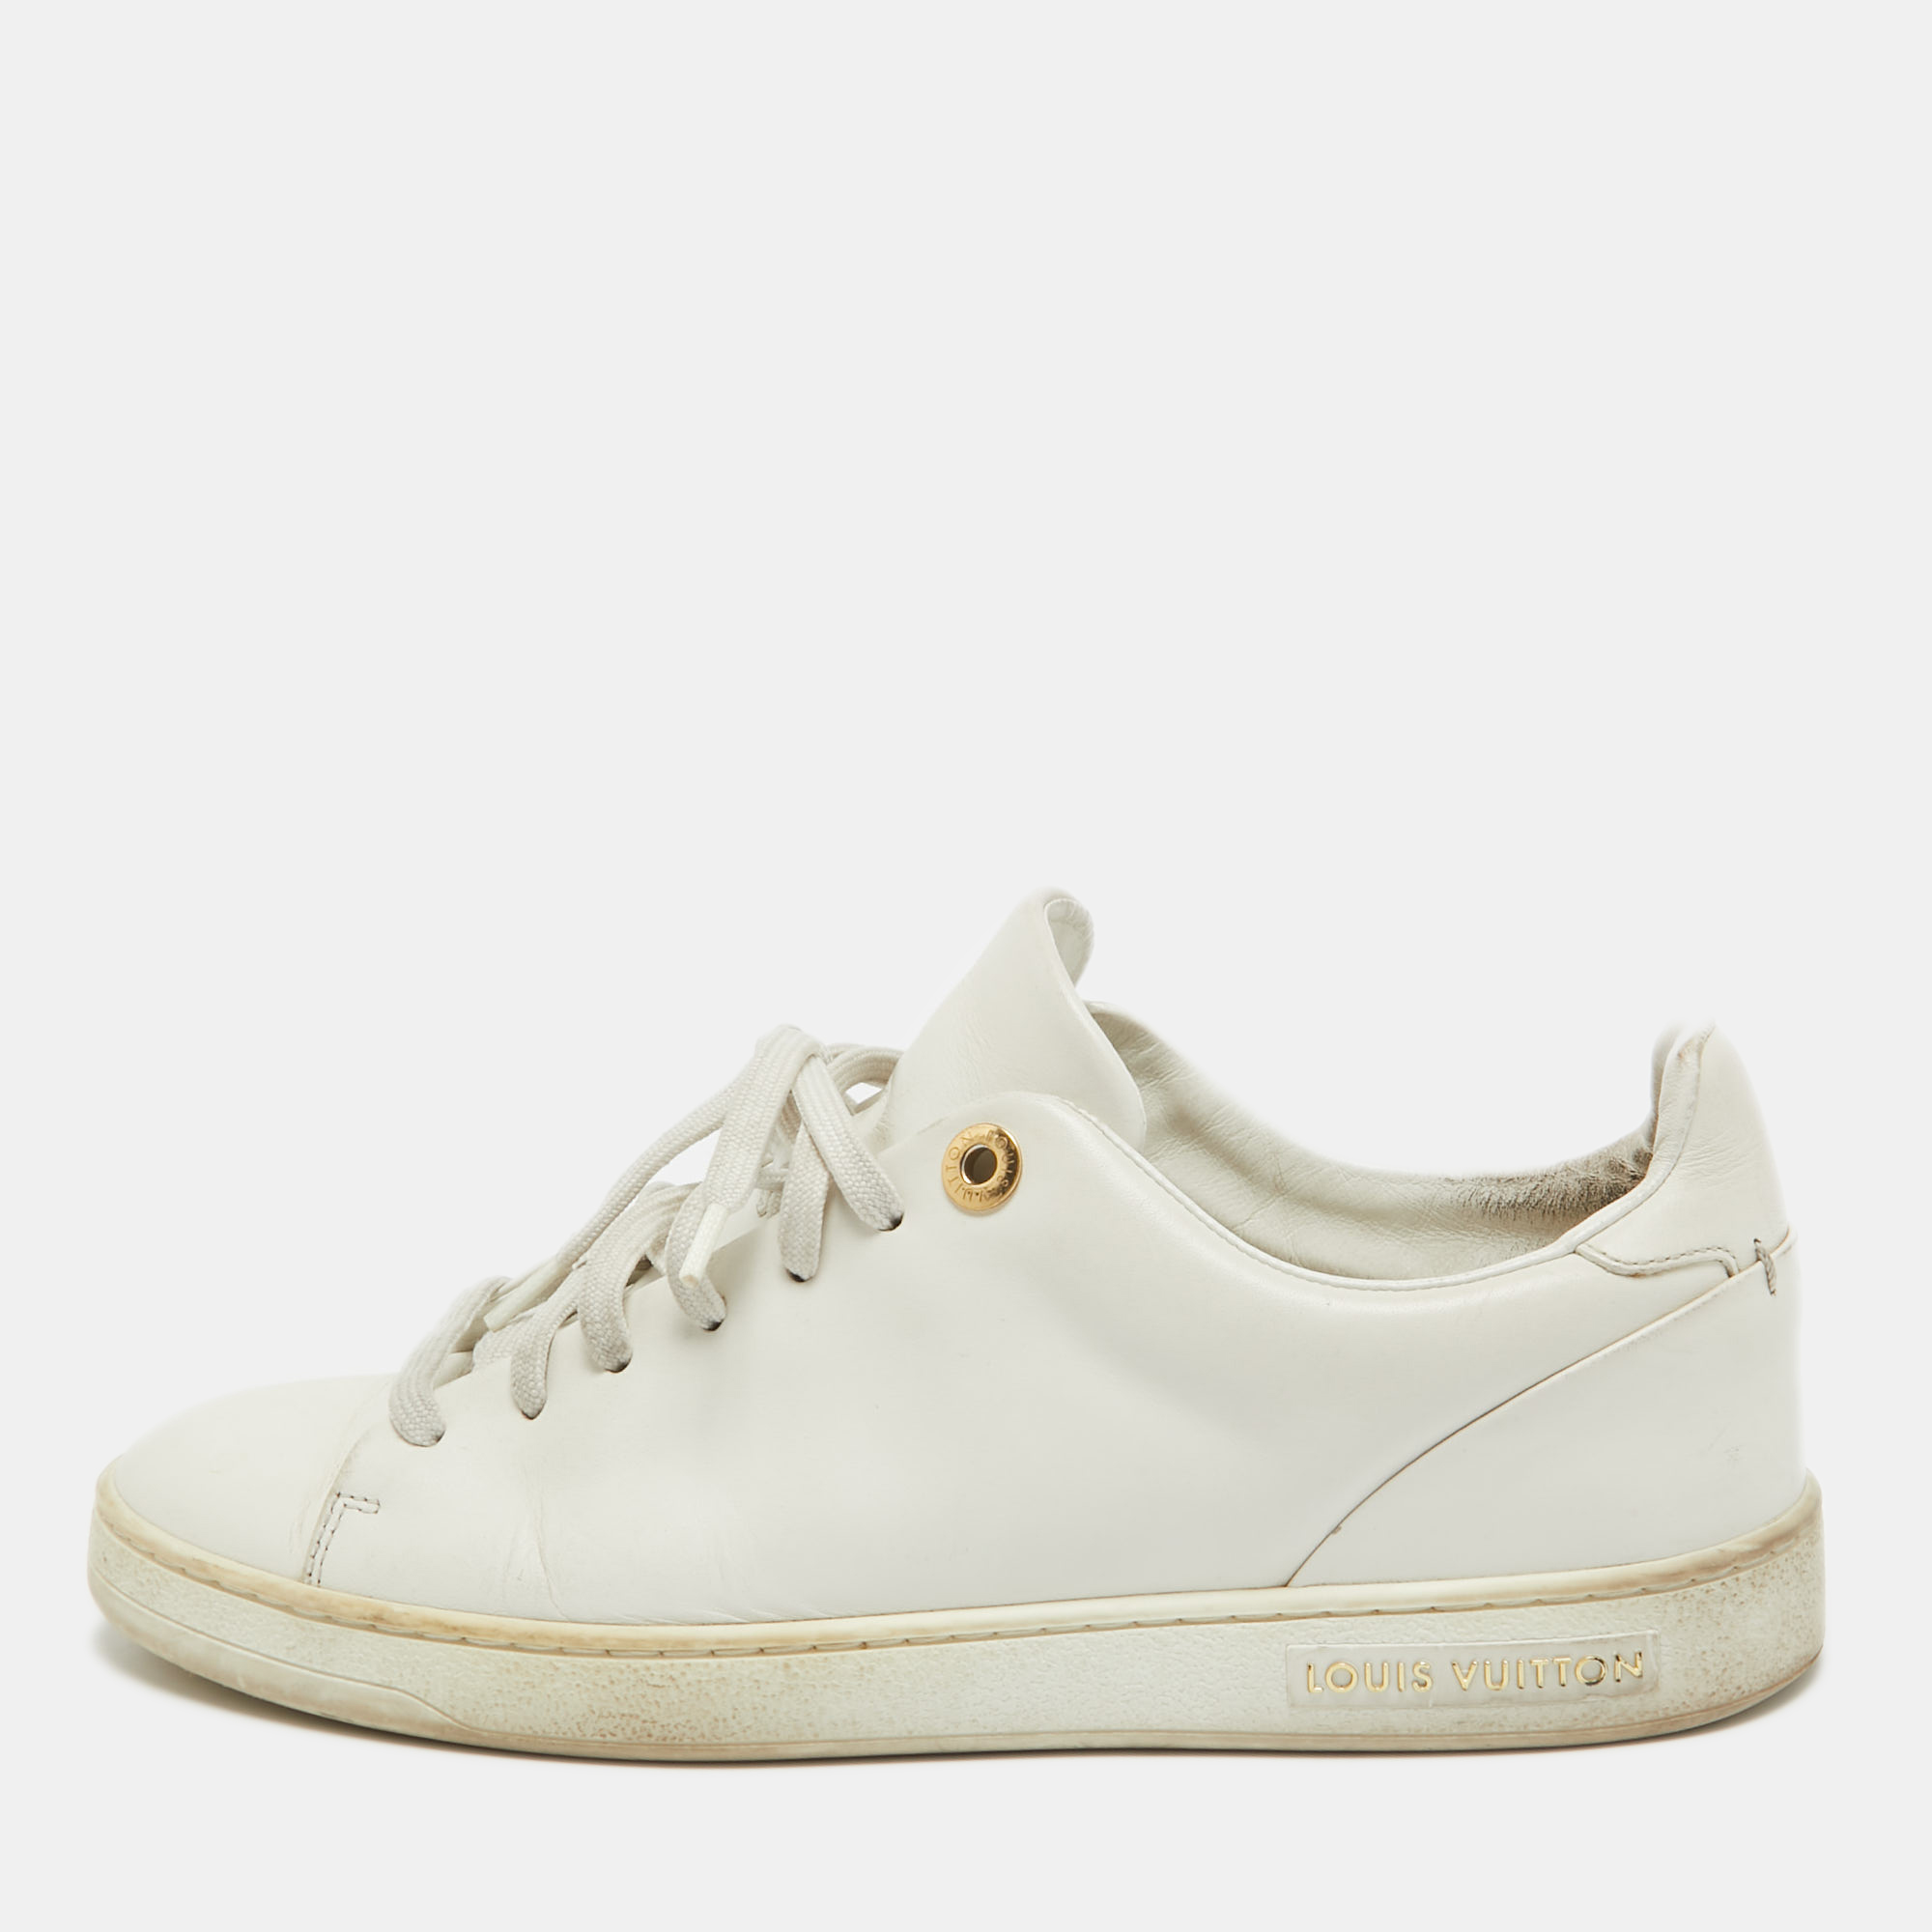 Louis vuitton white leather frontrow sneakers size 37.5